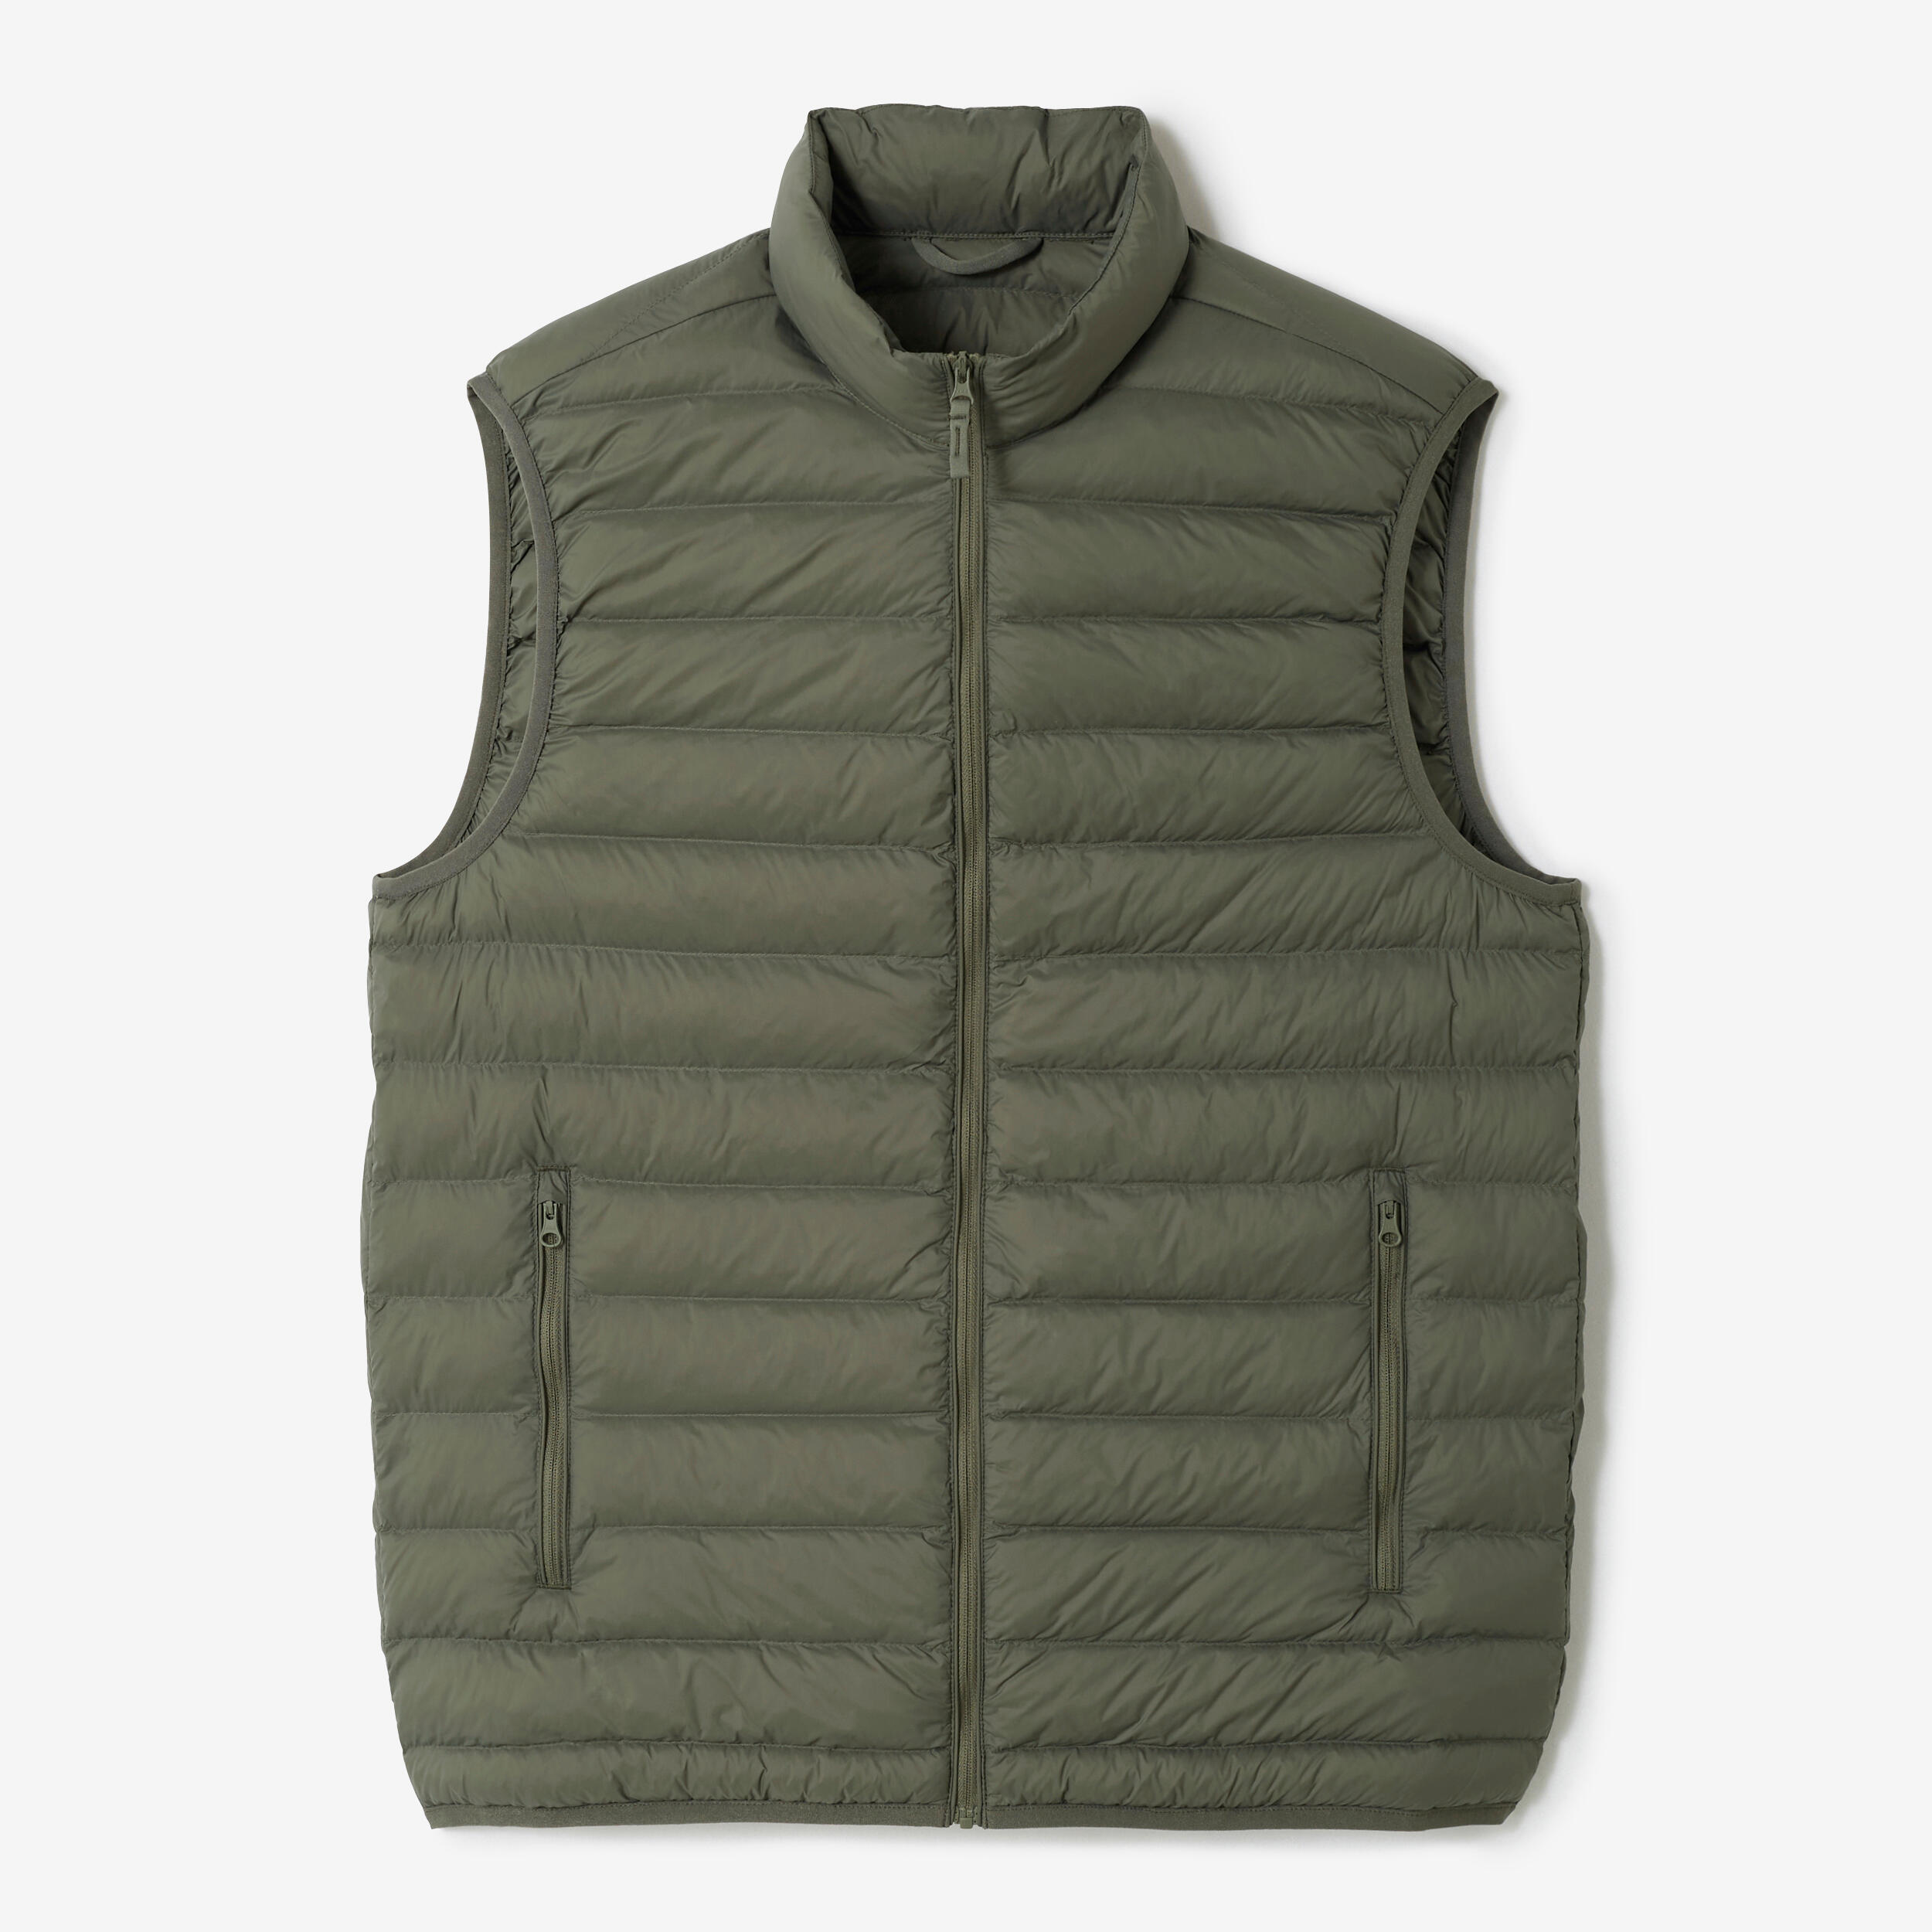 Men's golf sleeveless down jacket - MW500 khaki 8/8